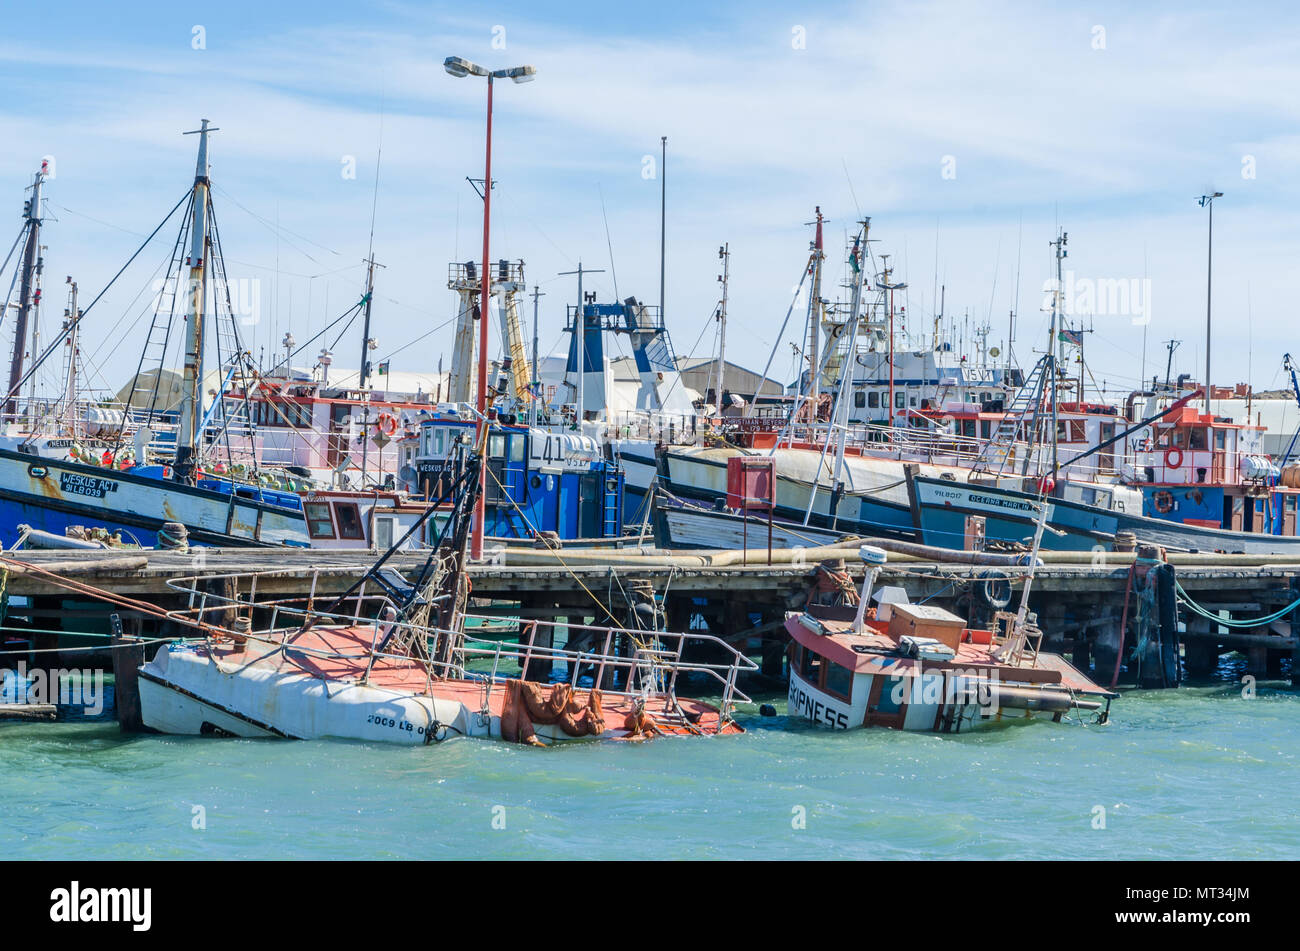 Luderitz, Namibia - July 08 2014: Luderitz harbor with many fishing boats and one sunken shipwreck Stock Photo